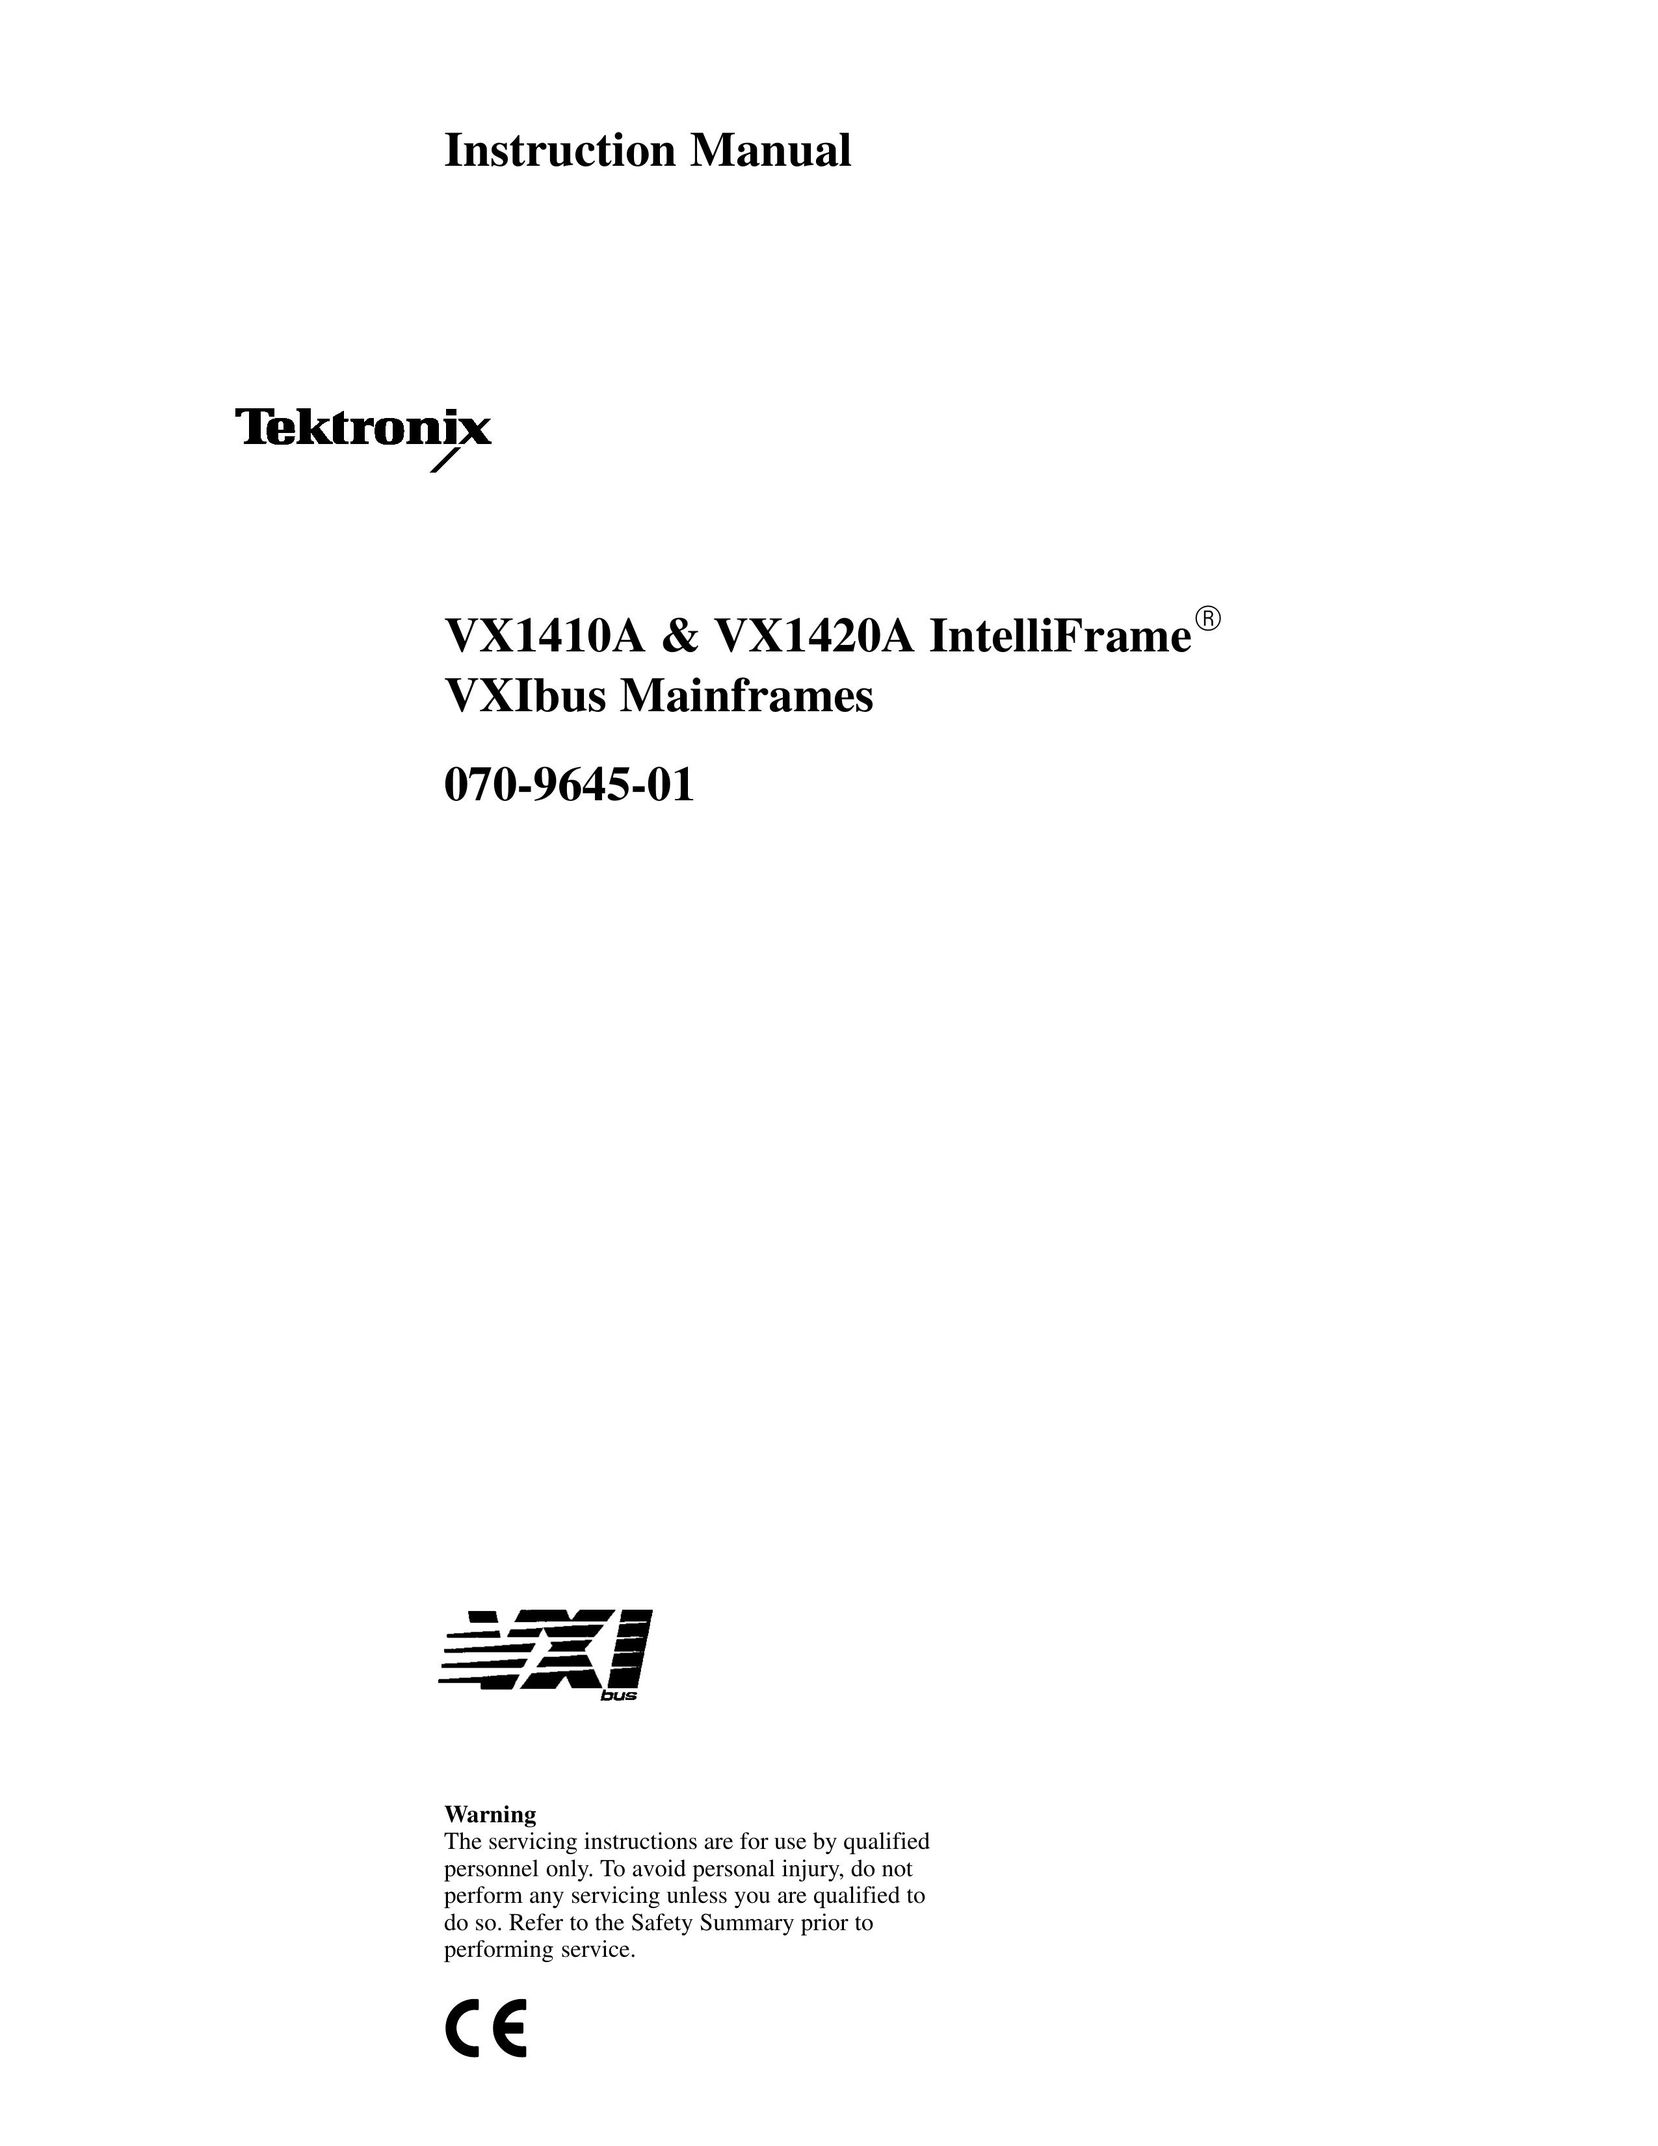 VXI VX1410A Computer Hardware User Manual